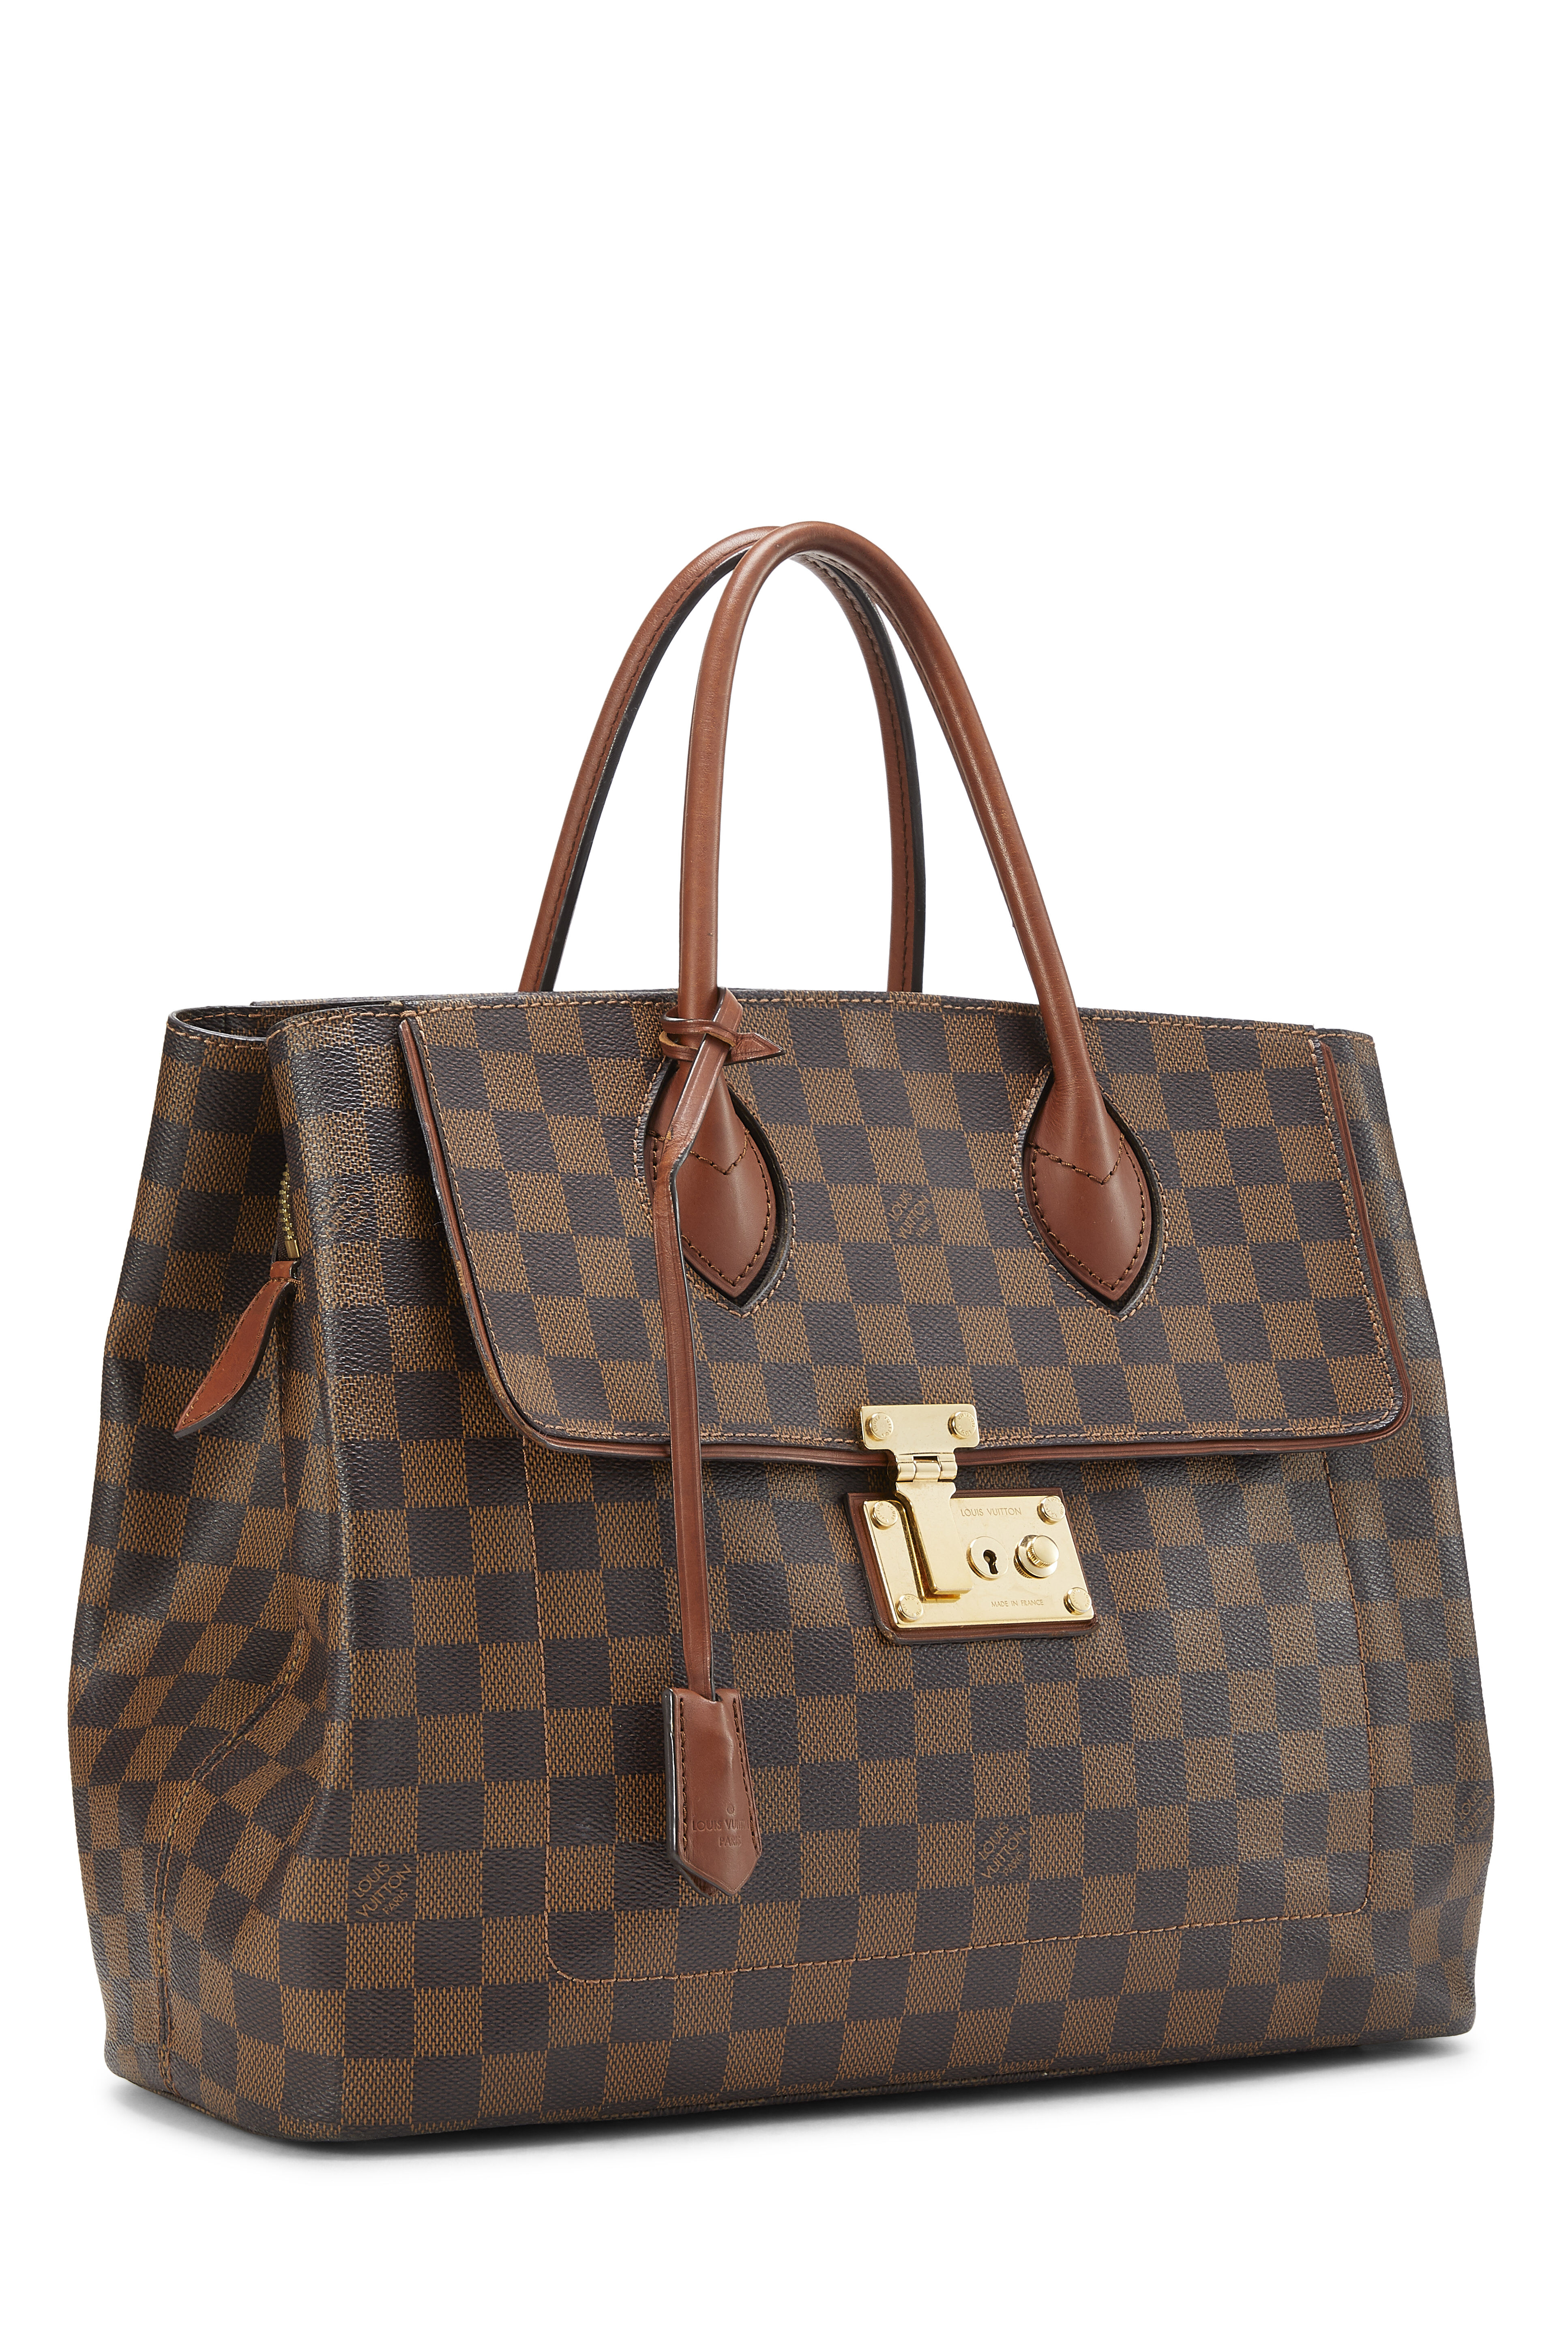 Louis Vuitton, Bags, Louis Vuitton Ascot Bag